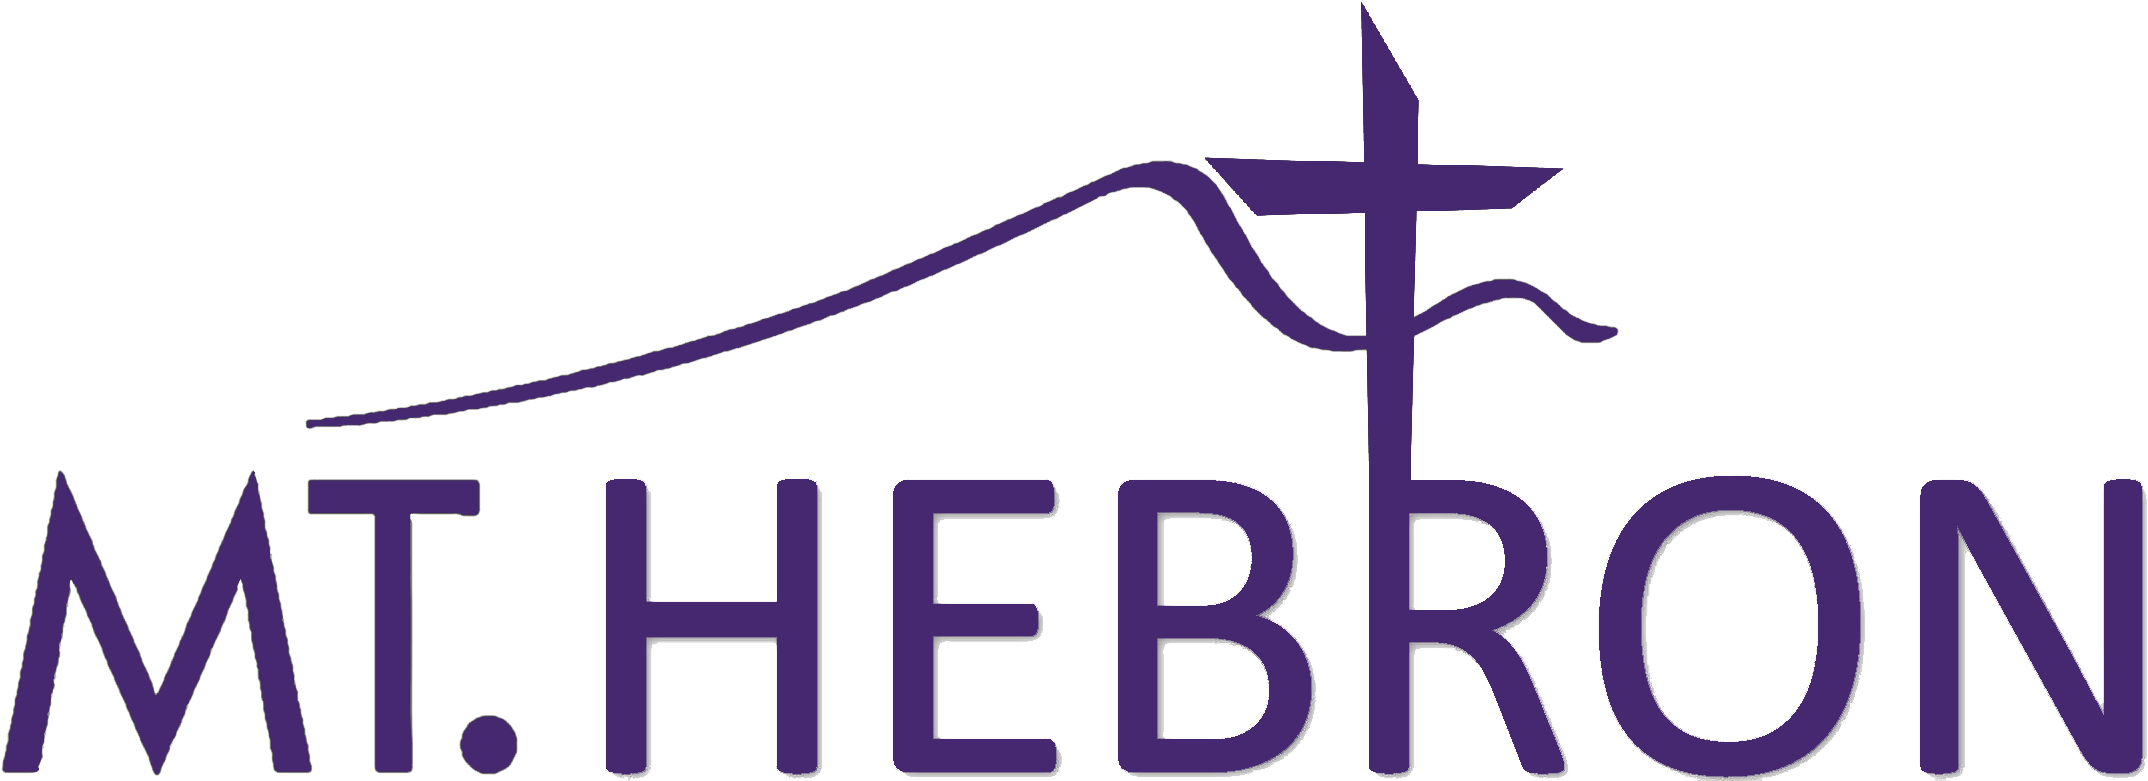 Hebron Missionary Baptist Church - Mt Hebron Baptist Church (2667x796)